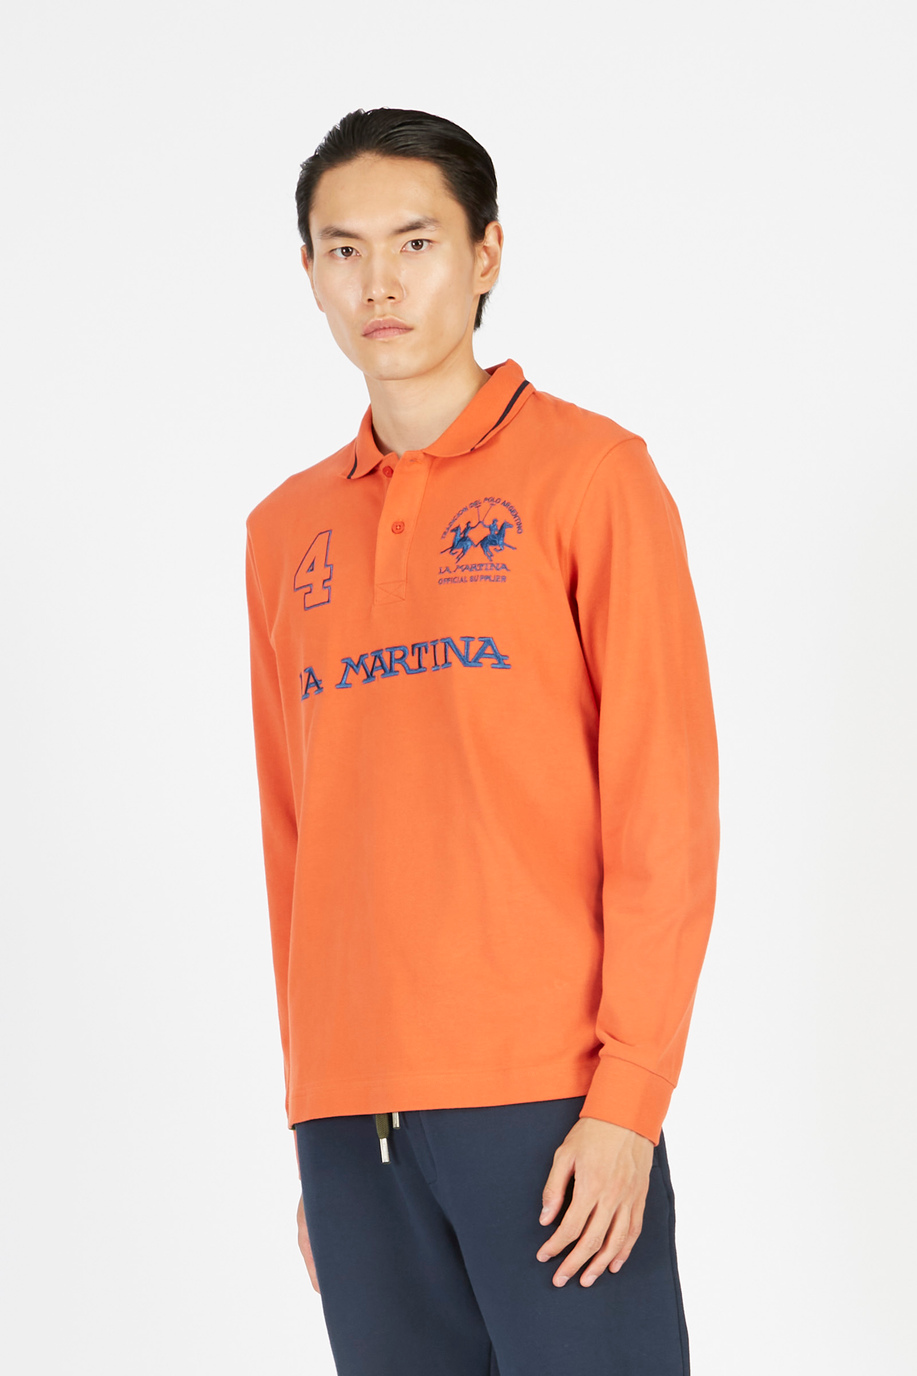 Men’s 100% regular fit cotton polo shirt with long sleeves - Best Seller | La Martina - Official Online Shop